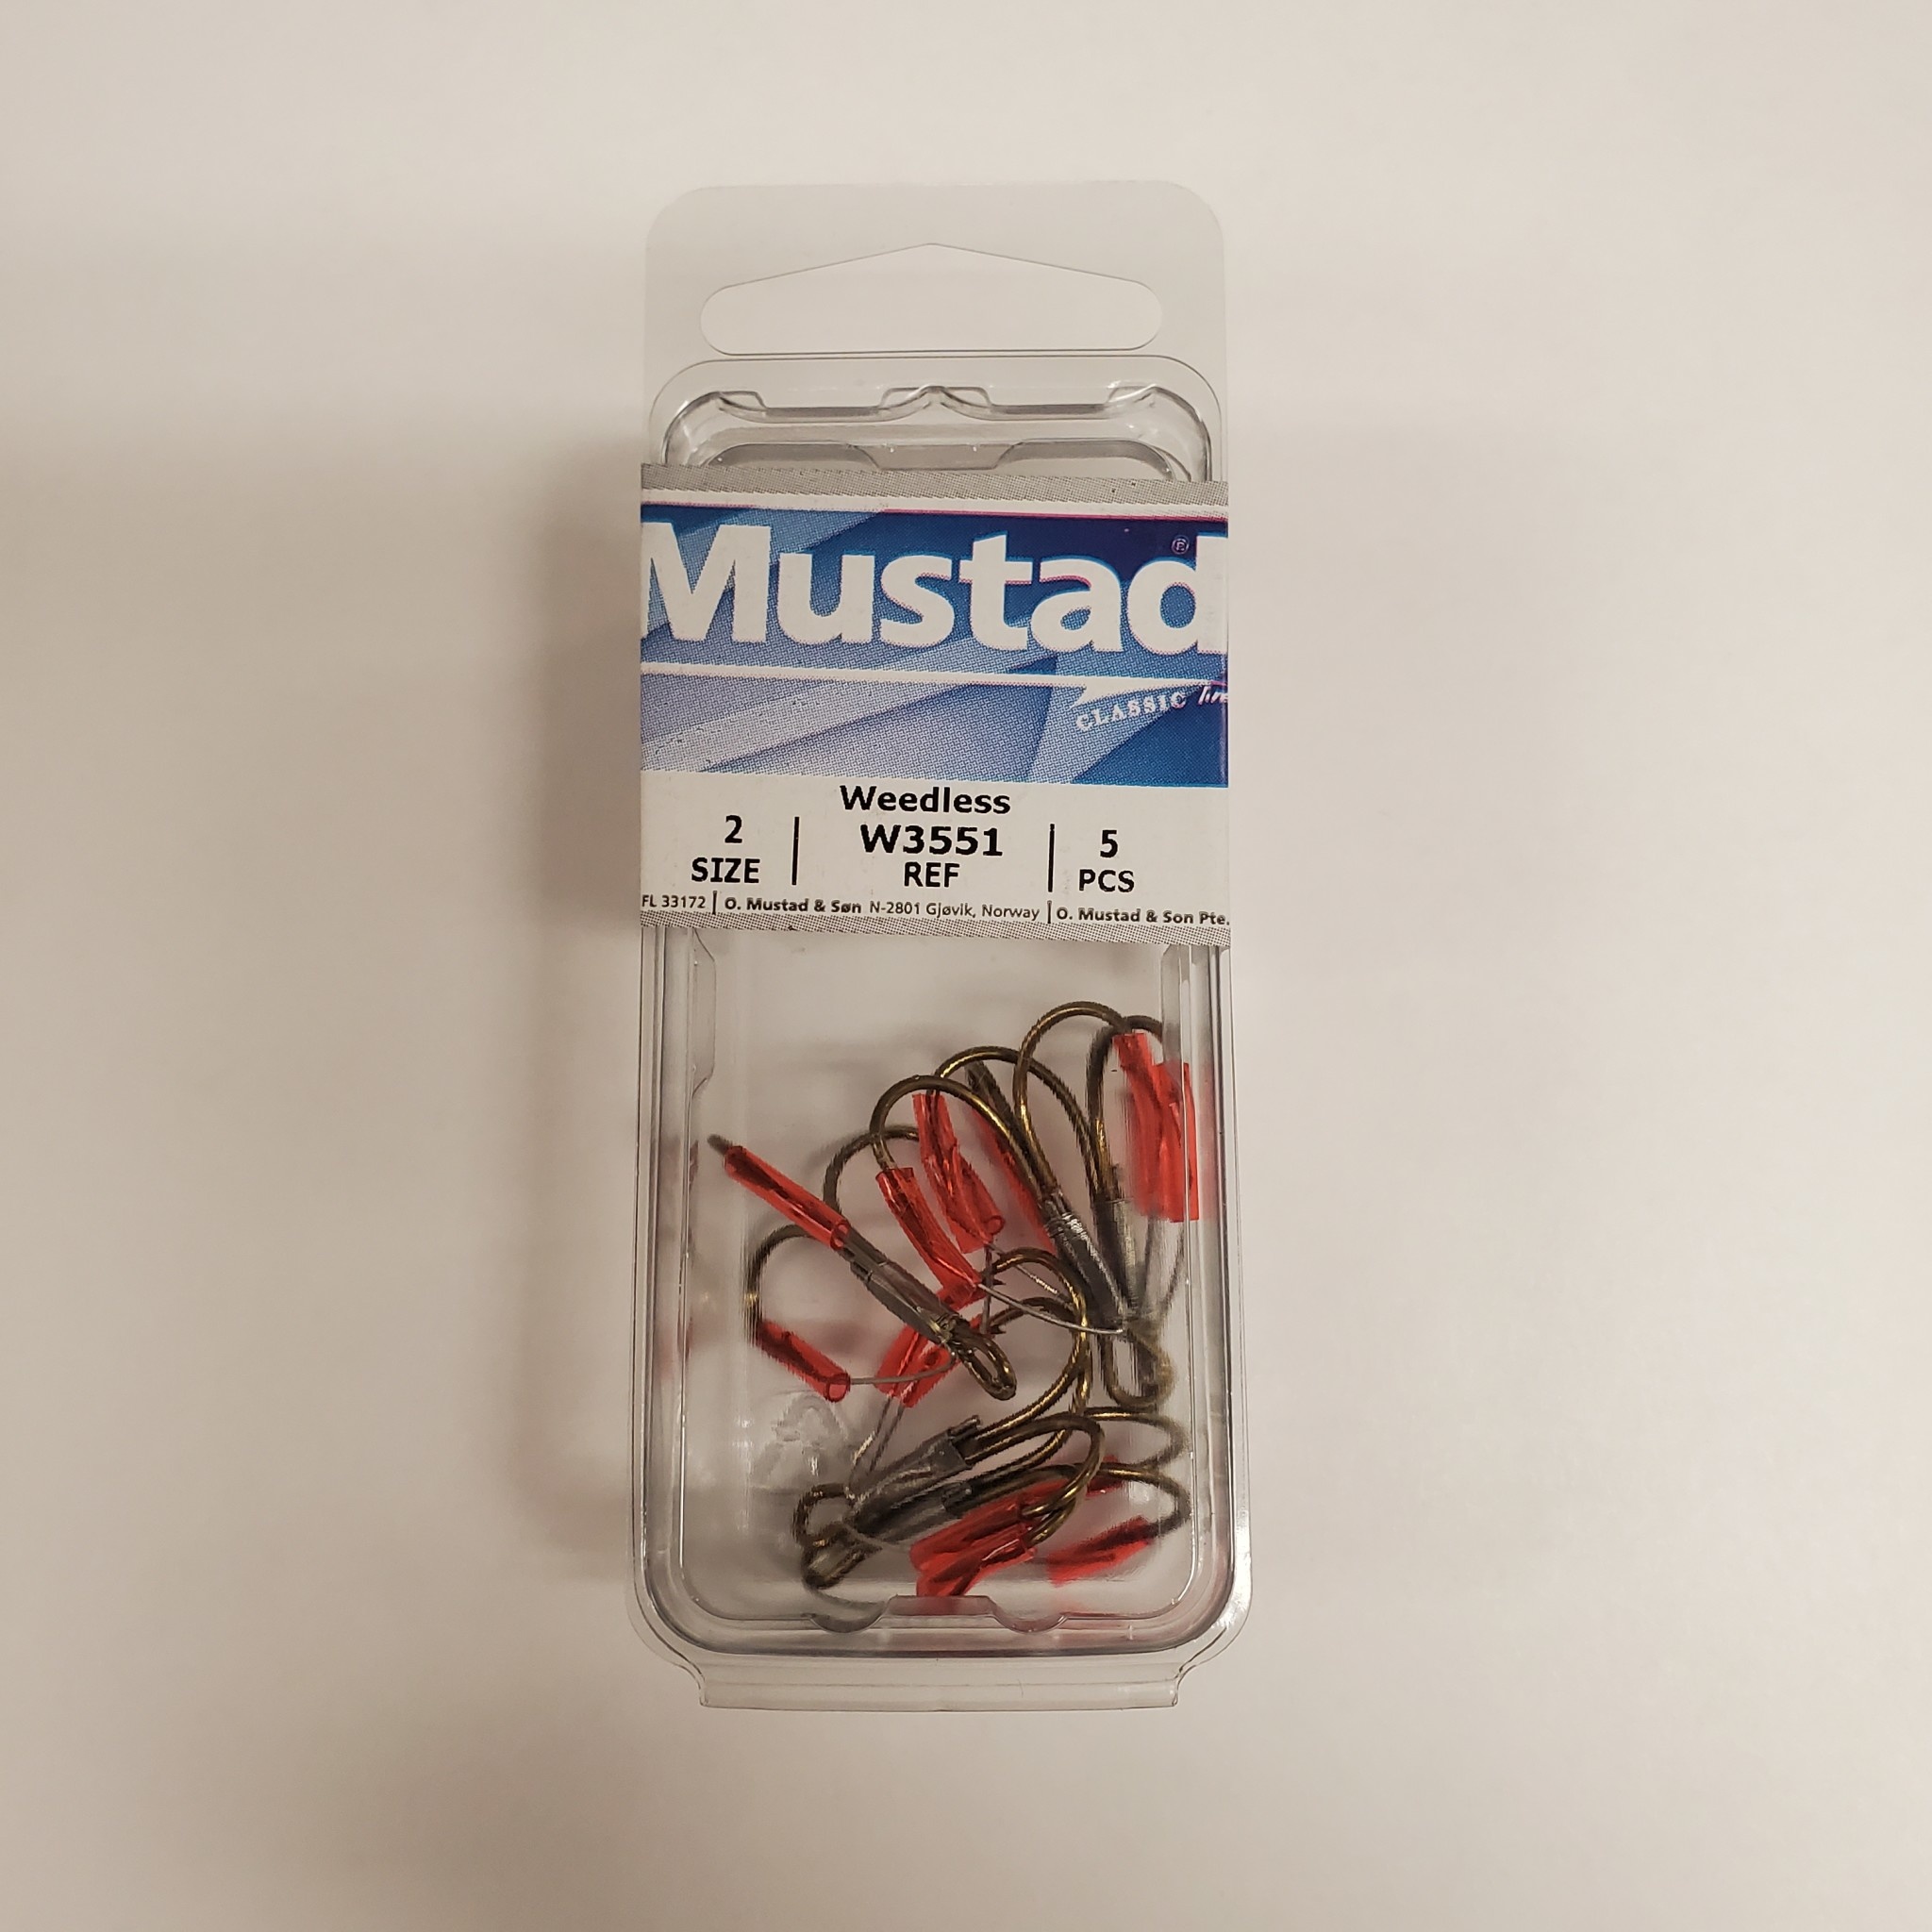 Mustad W3551 Weedless treble hook sz2 - Fehrs Sporting Goods Inc.